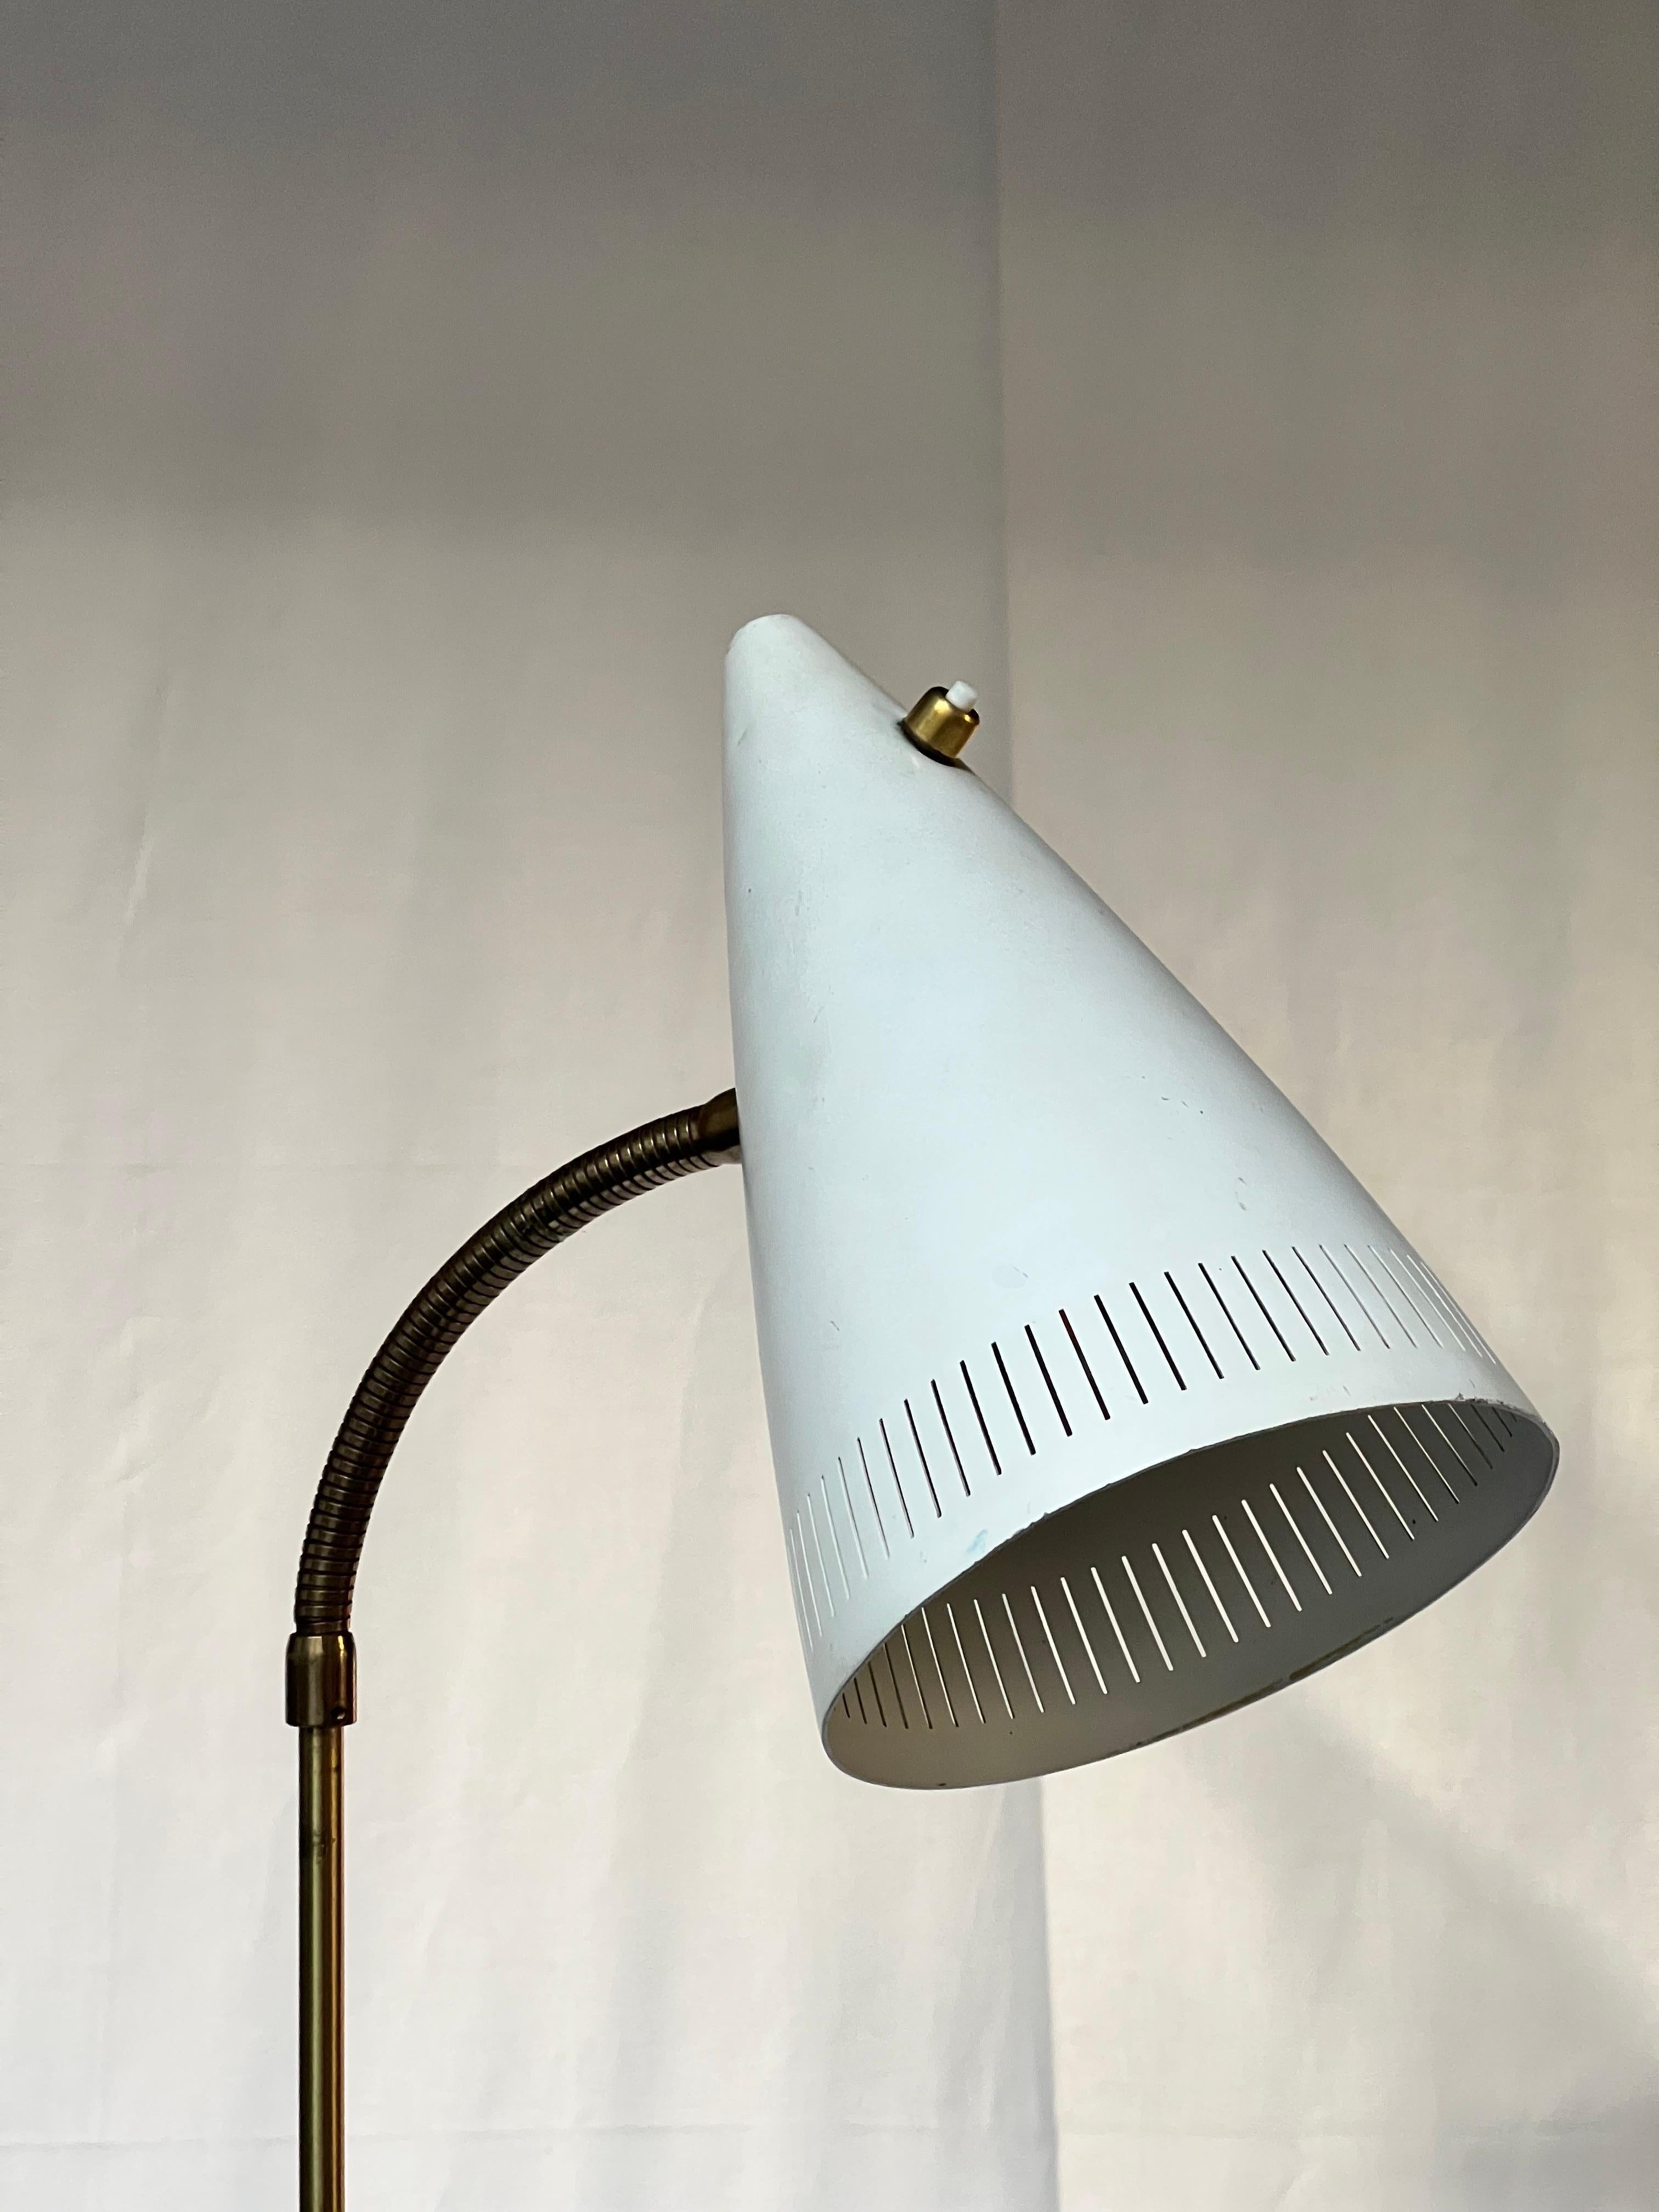 Falkenberg Brass Floor Lamp Adjustable in Height Sweden 1960's For Sale 3